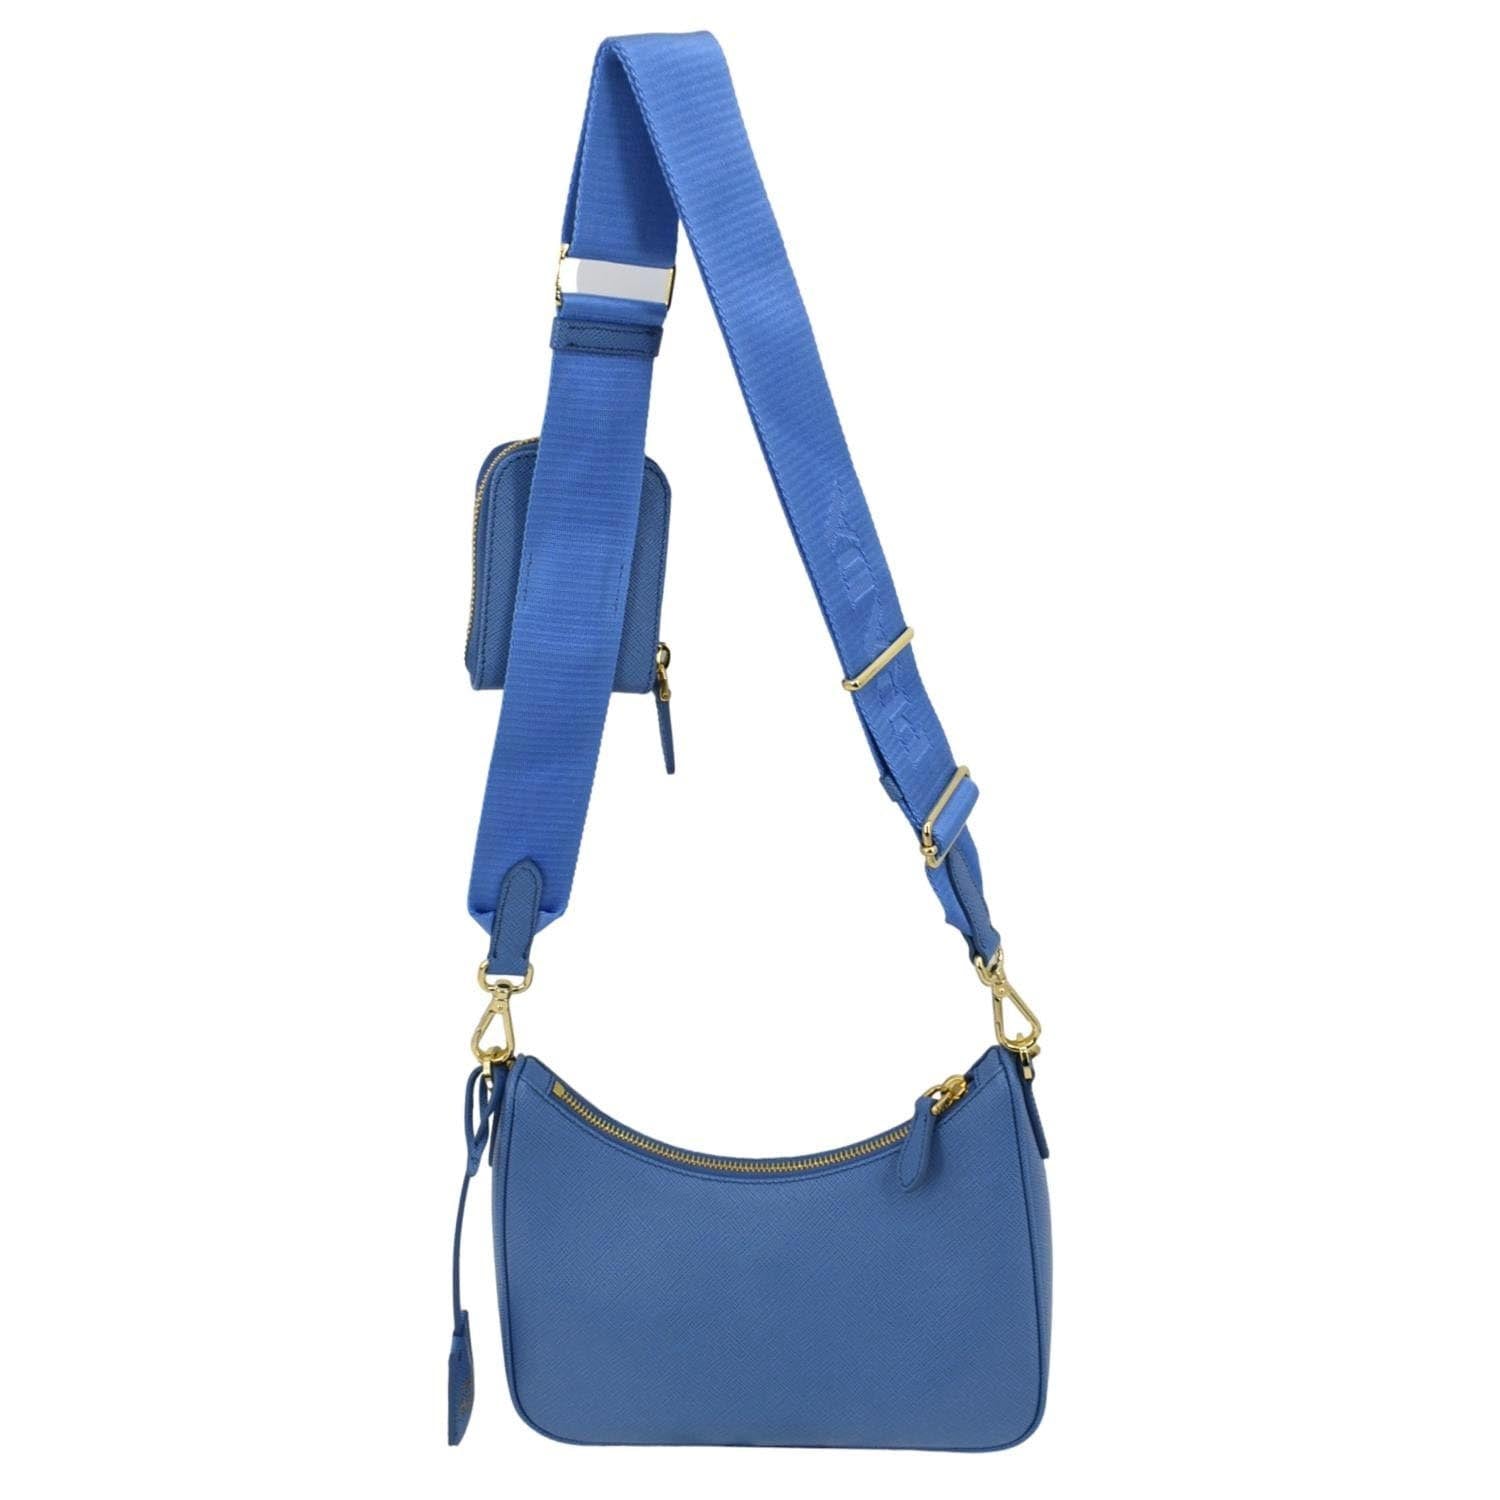 Prada Re-edition 2005 Saffiano Leather Bag in Blue